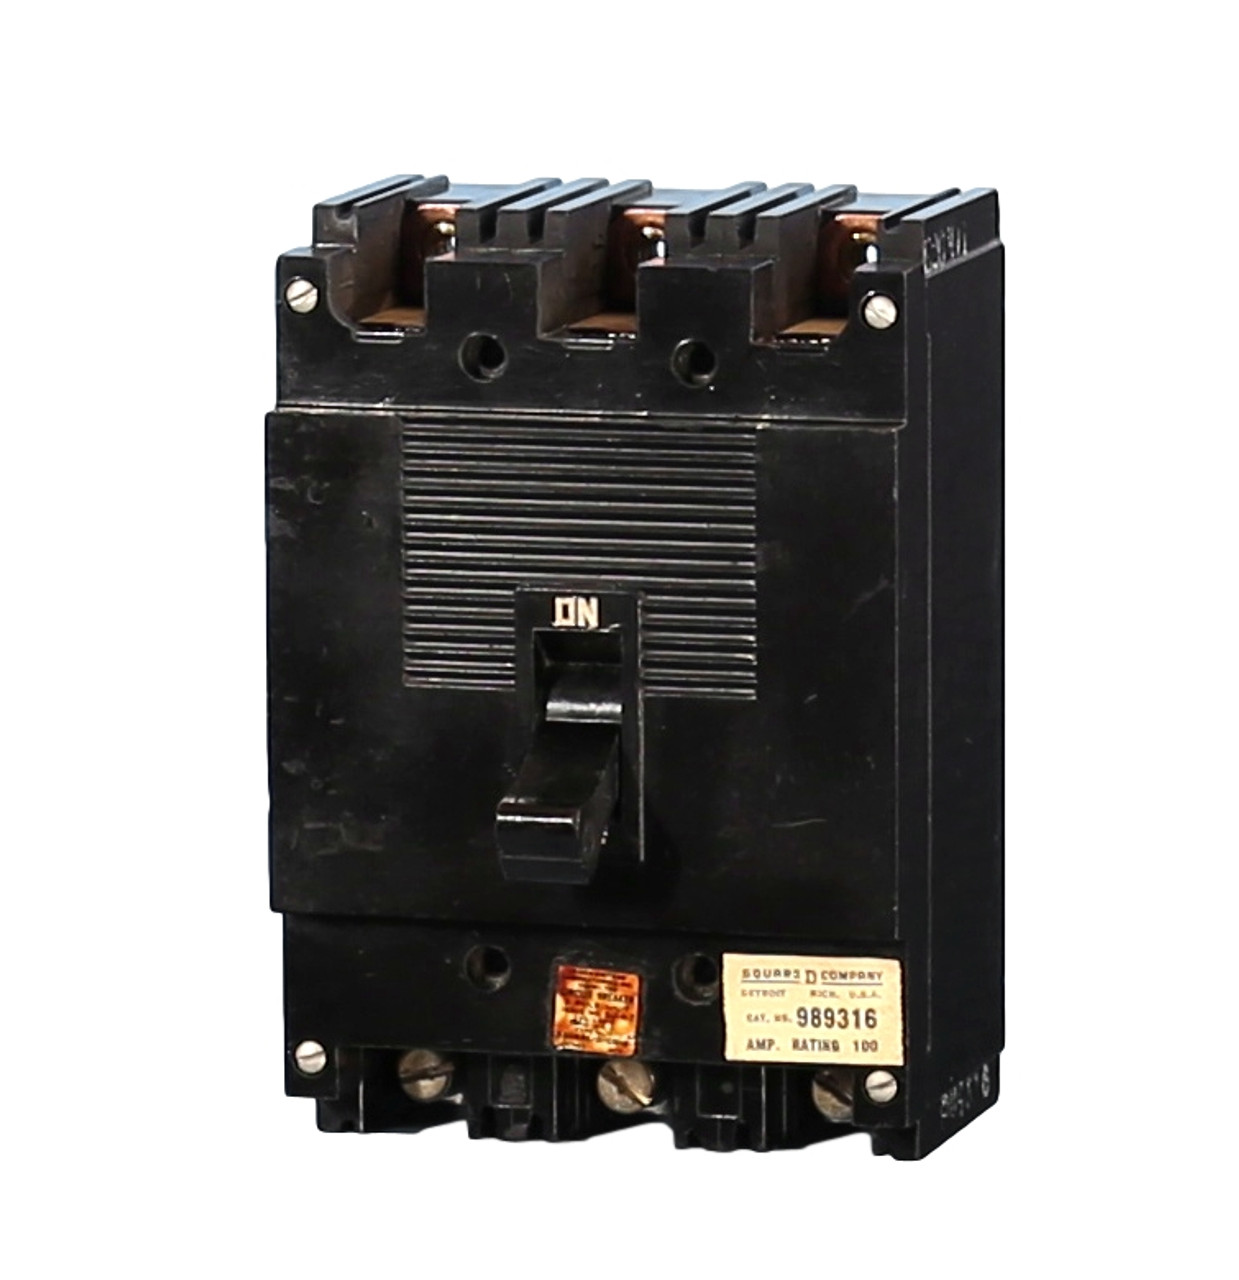 999316
ML-1 Square D Circuit Breaker
(Pic Represents all Amps)